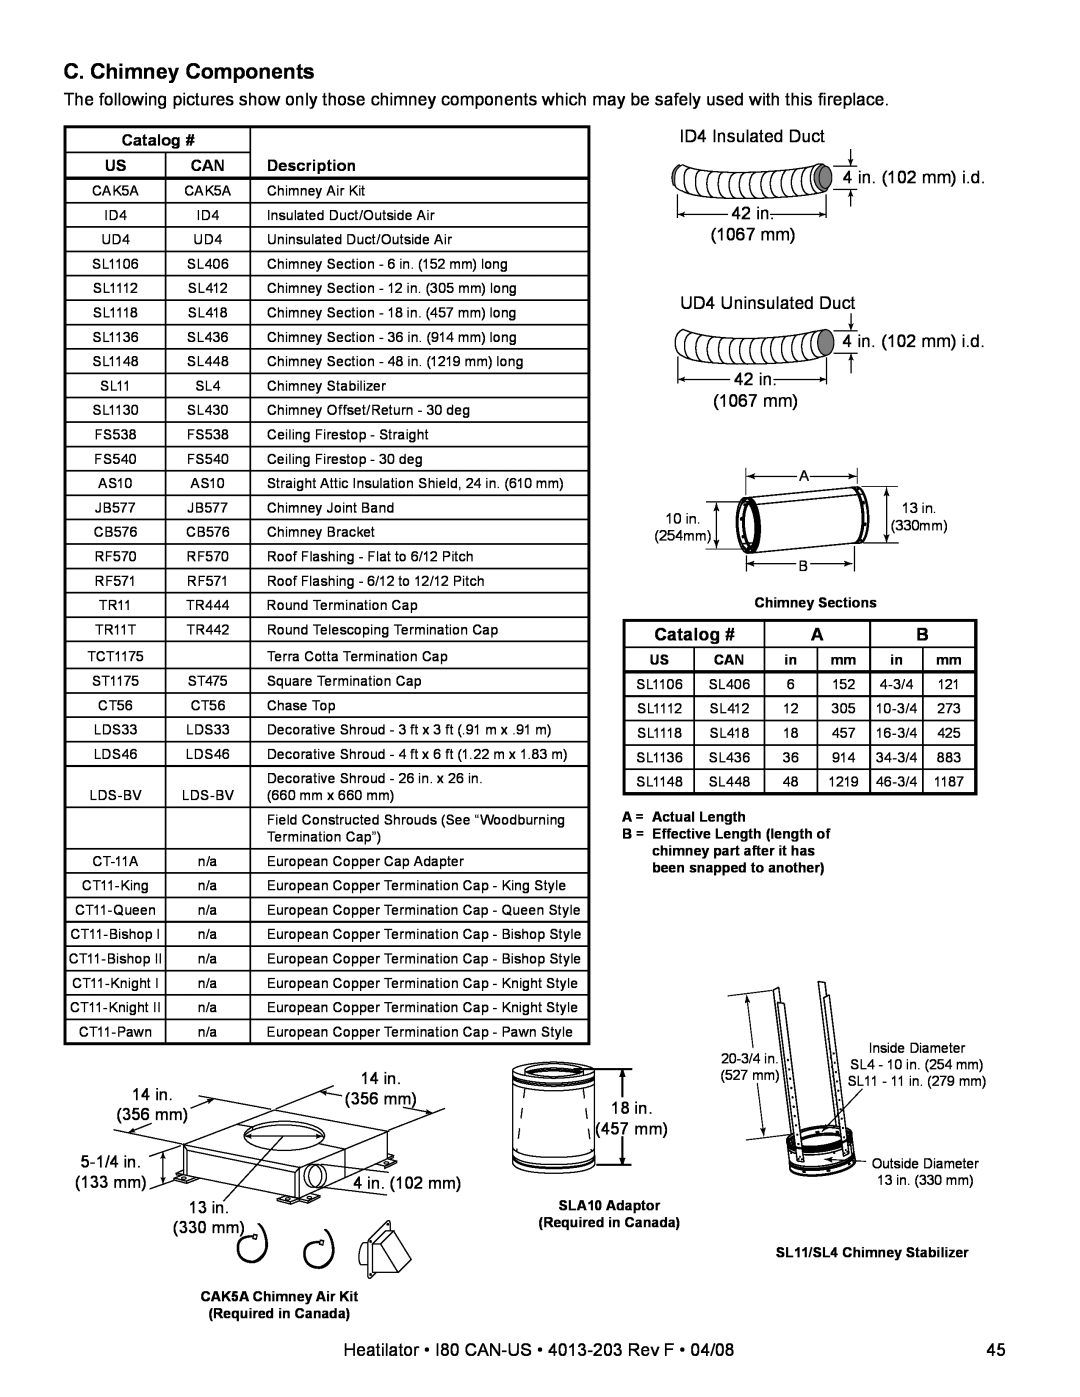 Heatiator I80 owner manual C. Chimney Components, Catalog # 